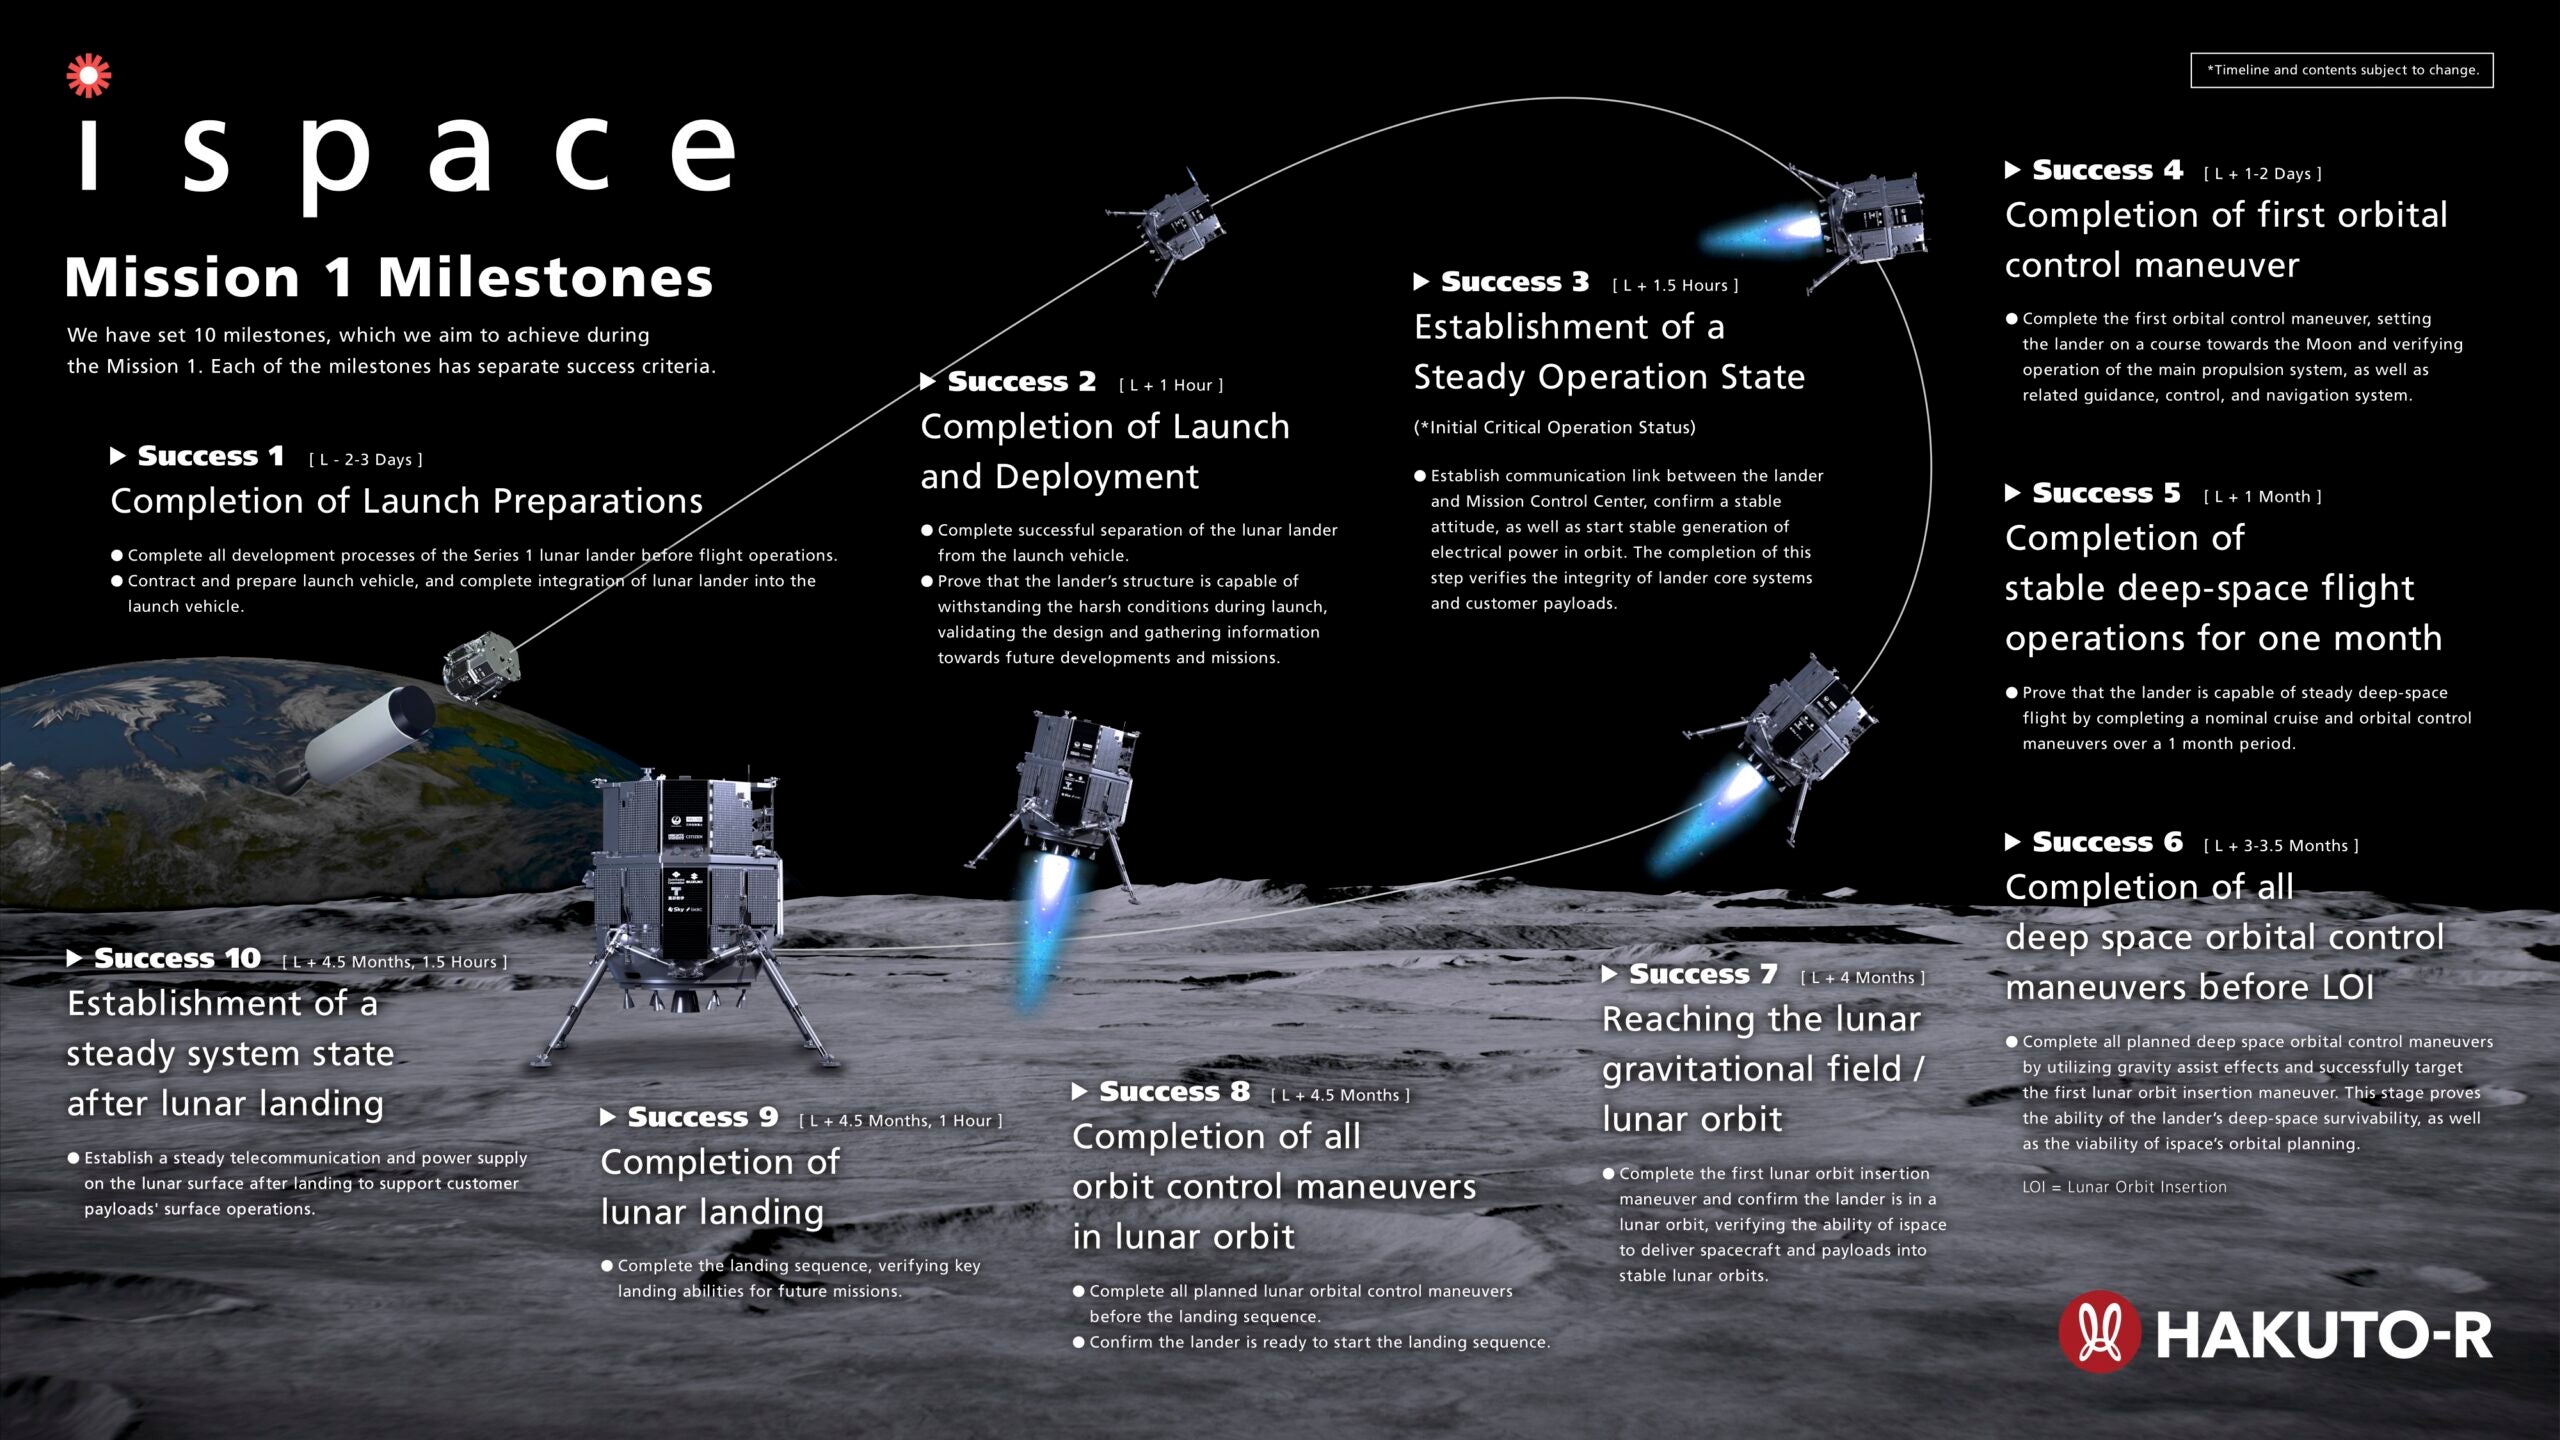 ispace Hakuto-R Mission 1 profile and milestones.  (Graphic: ispace)